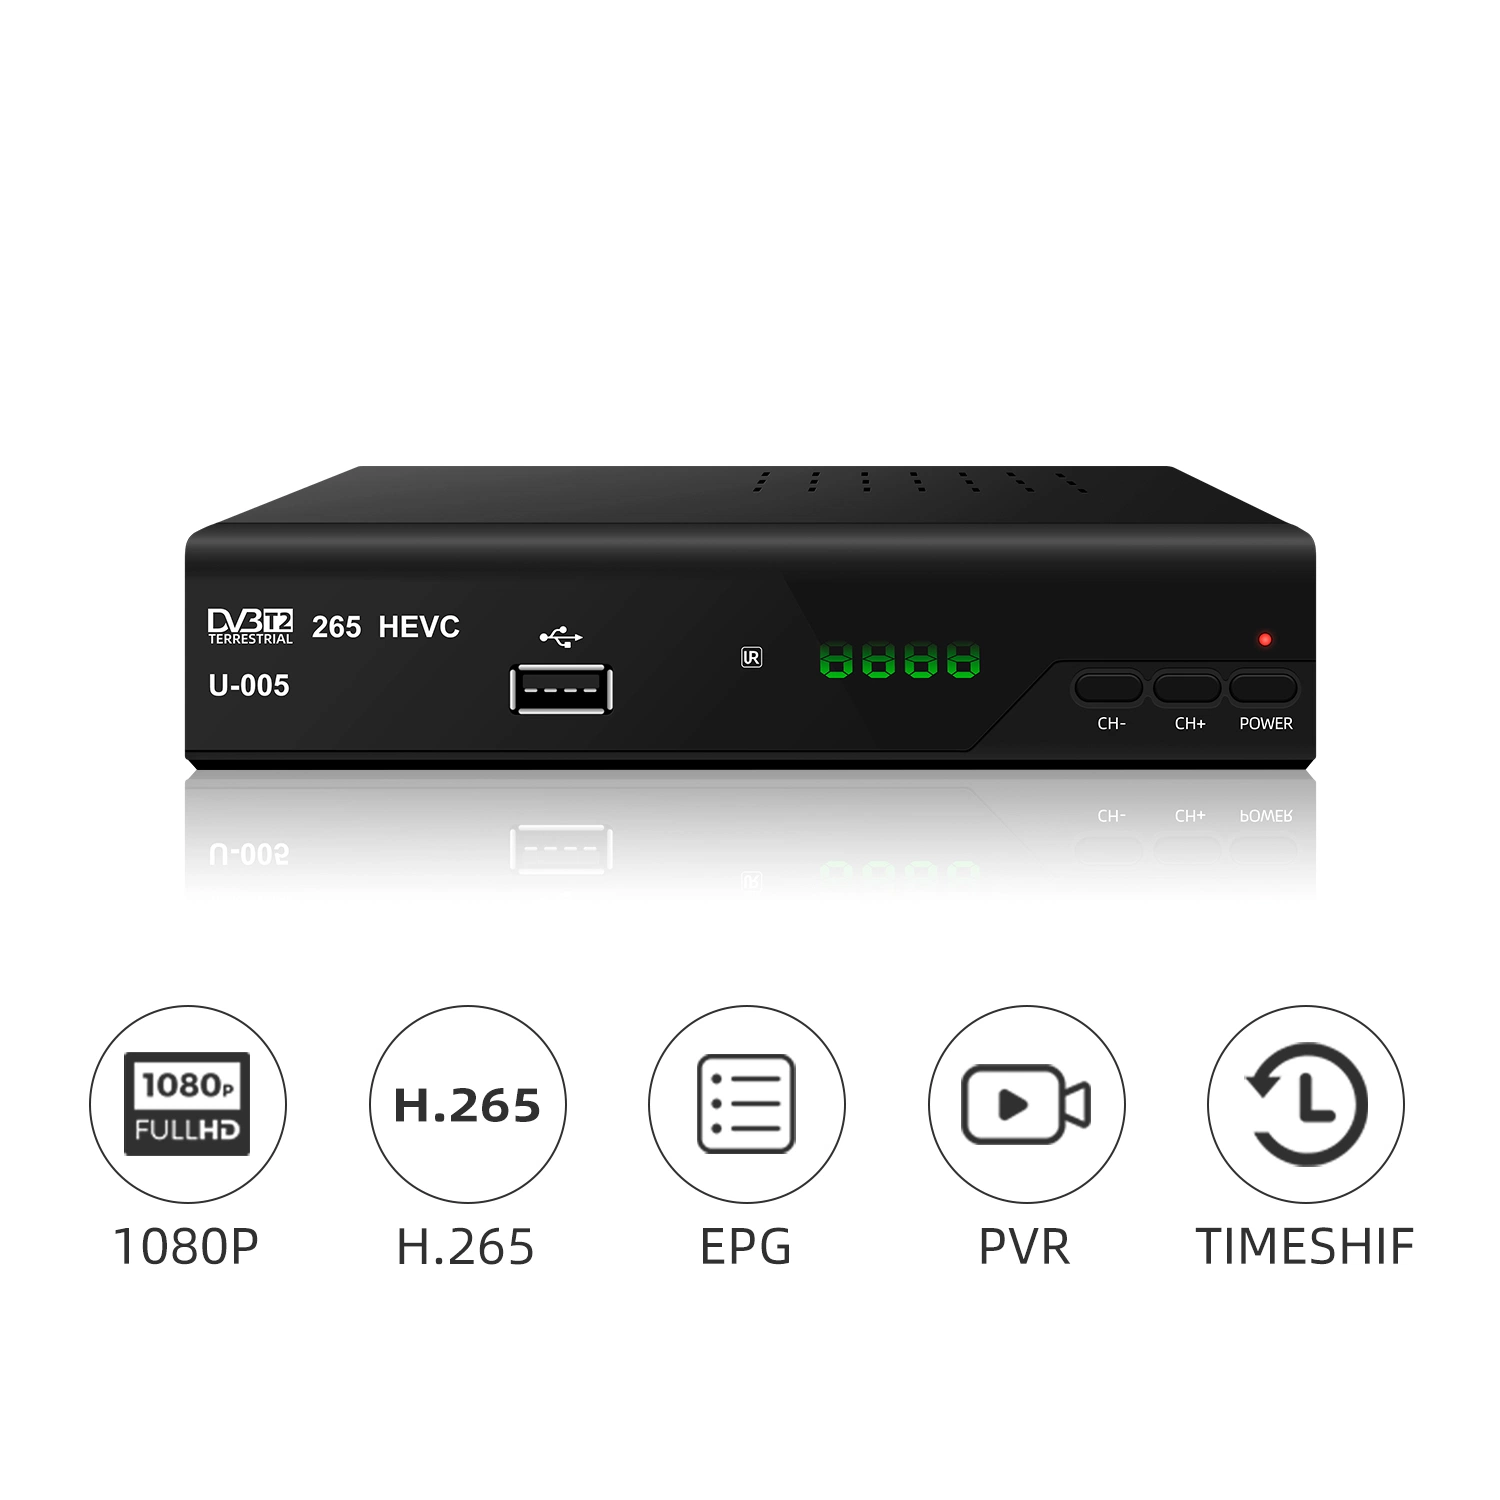 União FTA Digital Full HD DVB-T2 Receptor Terrestre H. 265 Hevc Scart Mediaplayer USB